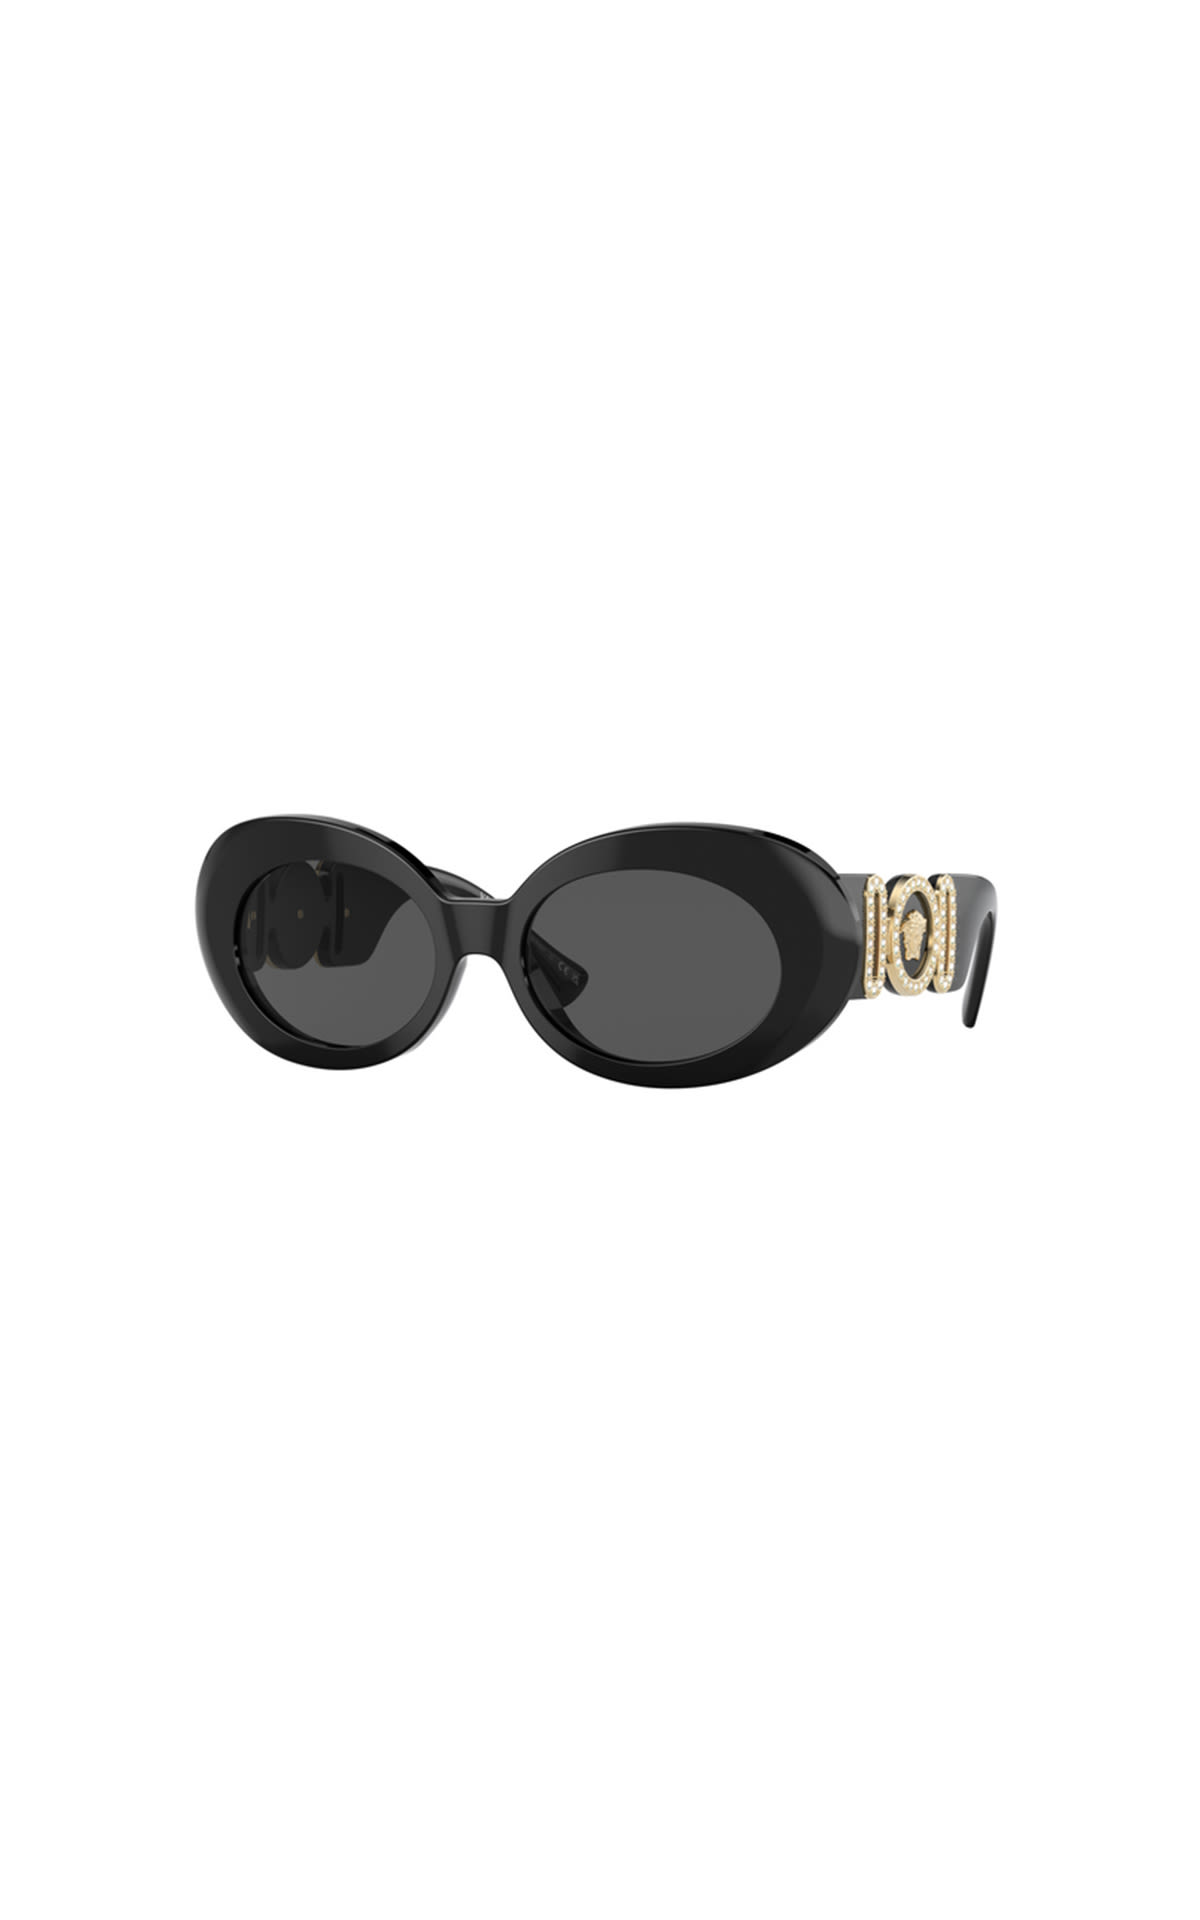 Versace black pasta sunglasses SunglassHut